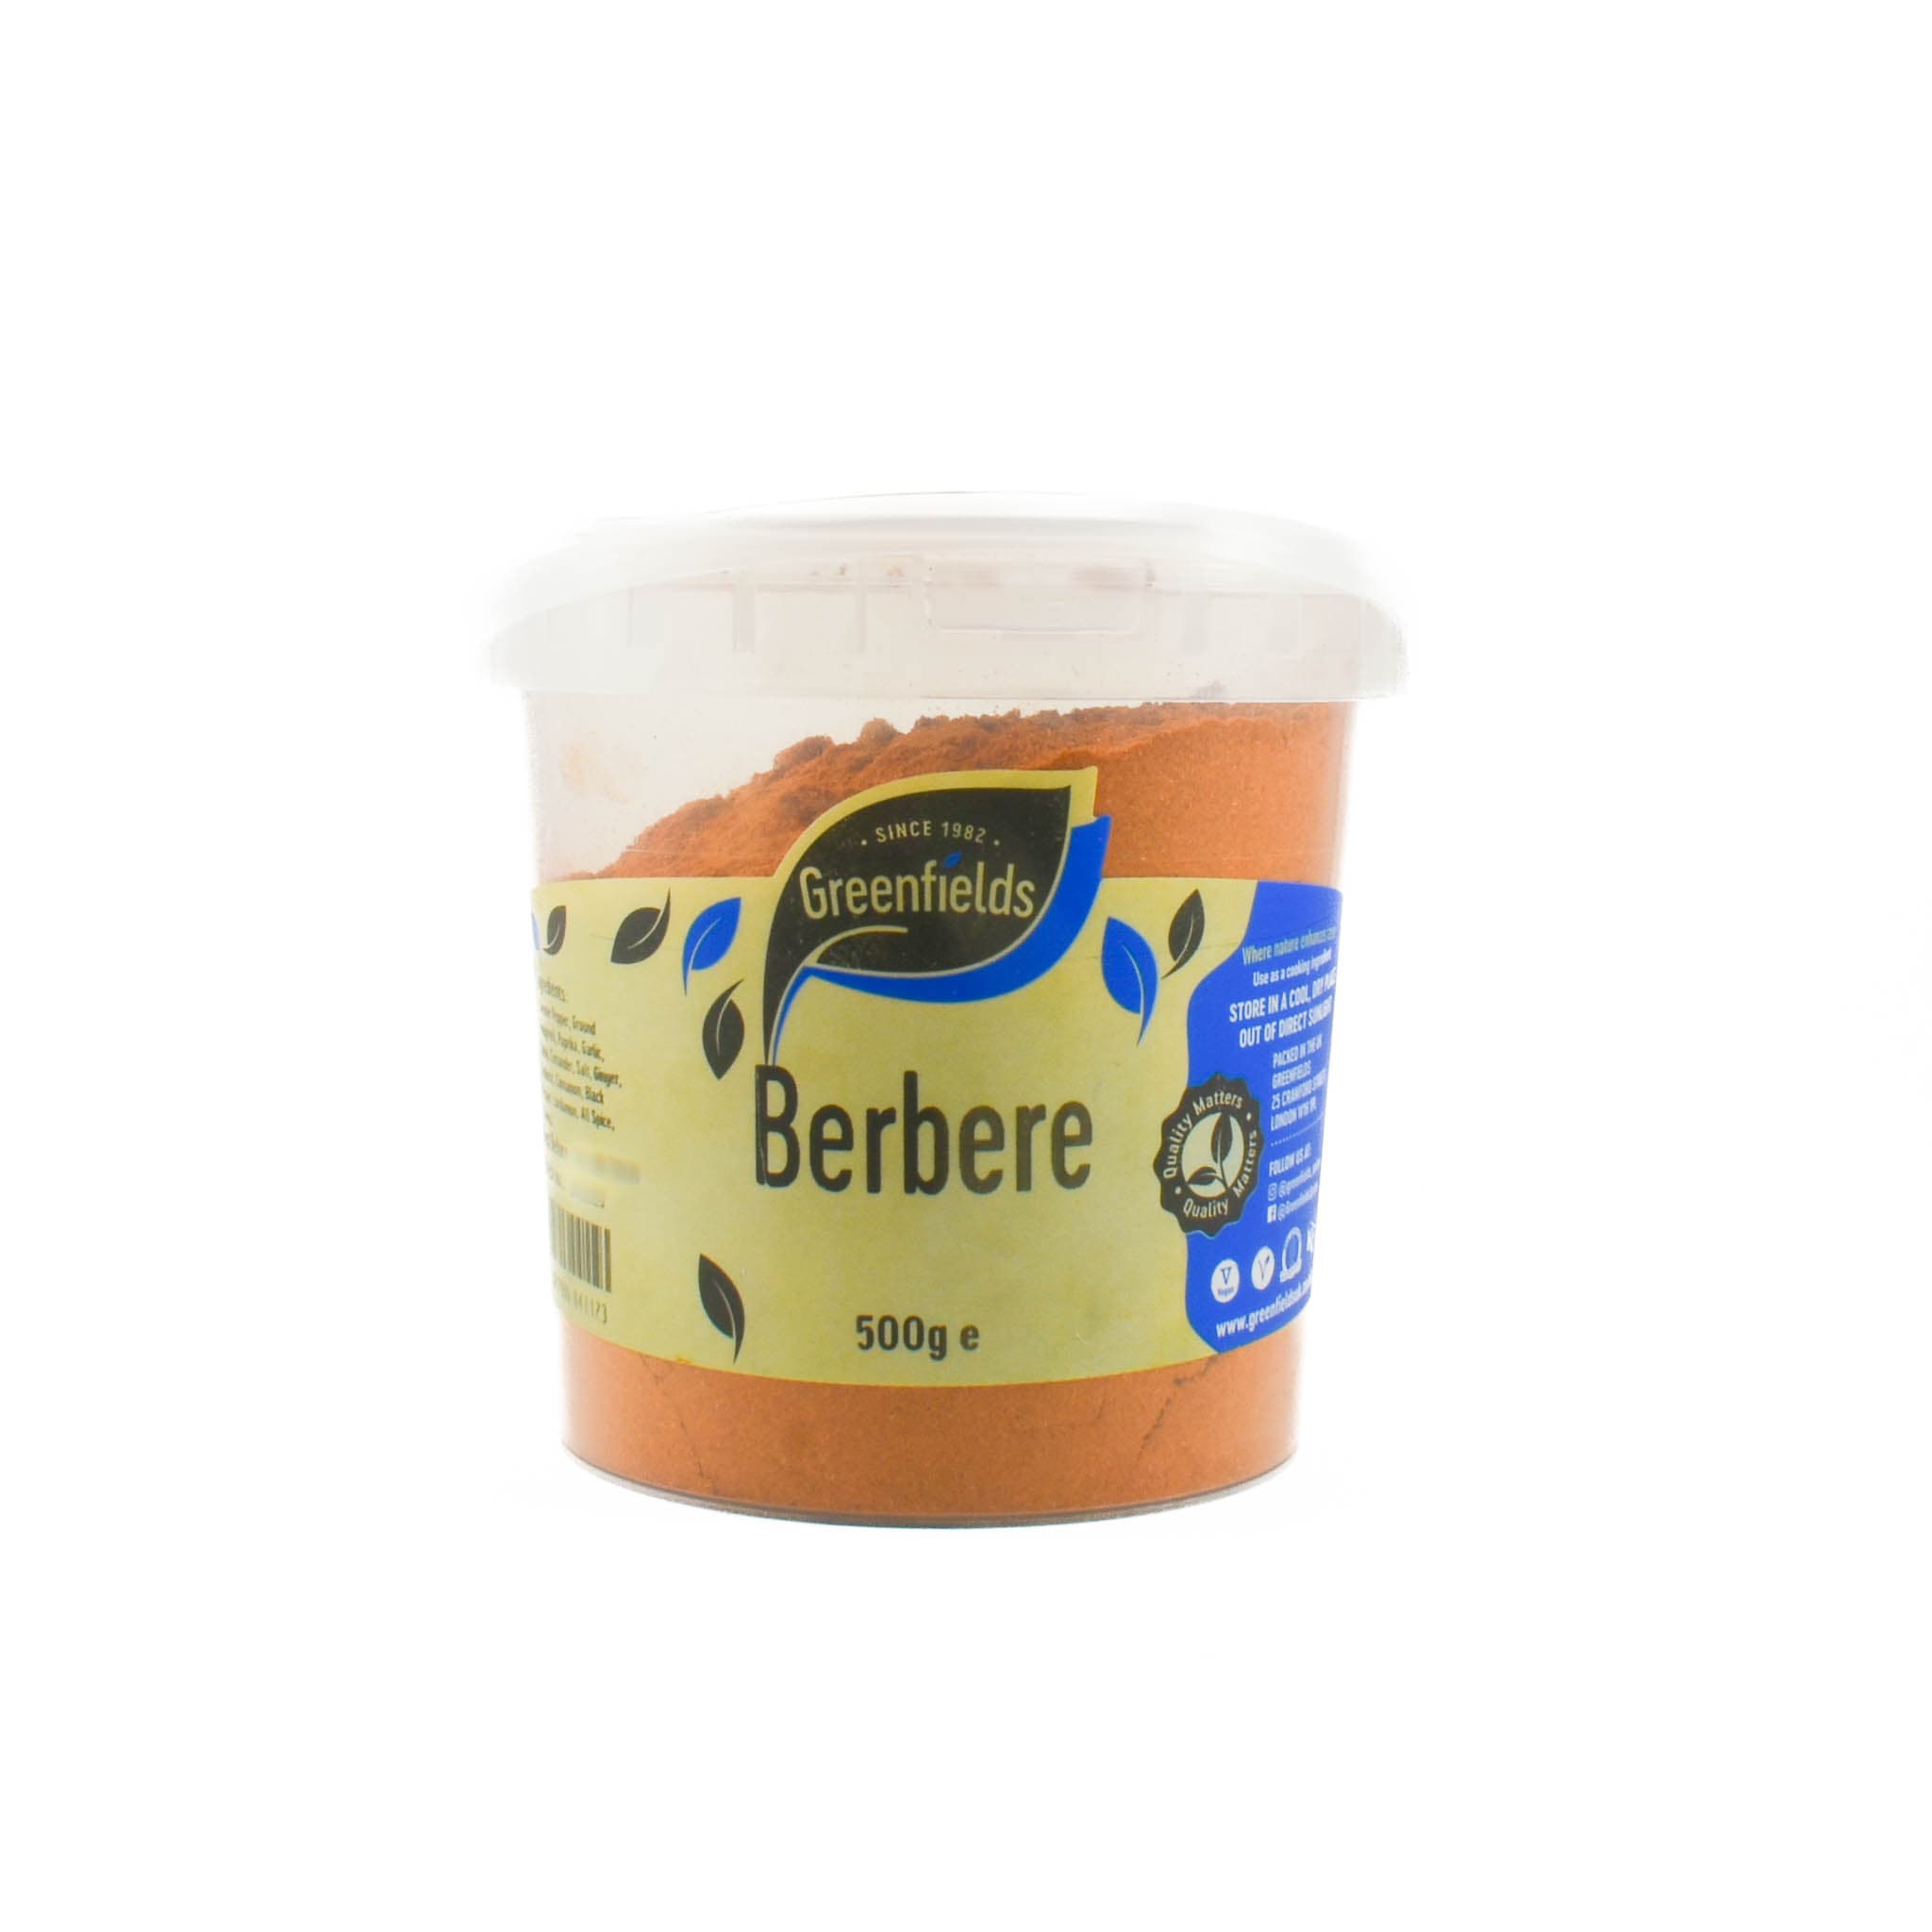 Greenfields Berbere Spice Blend